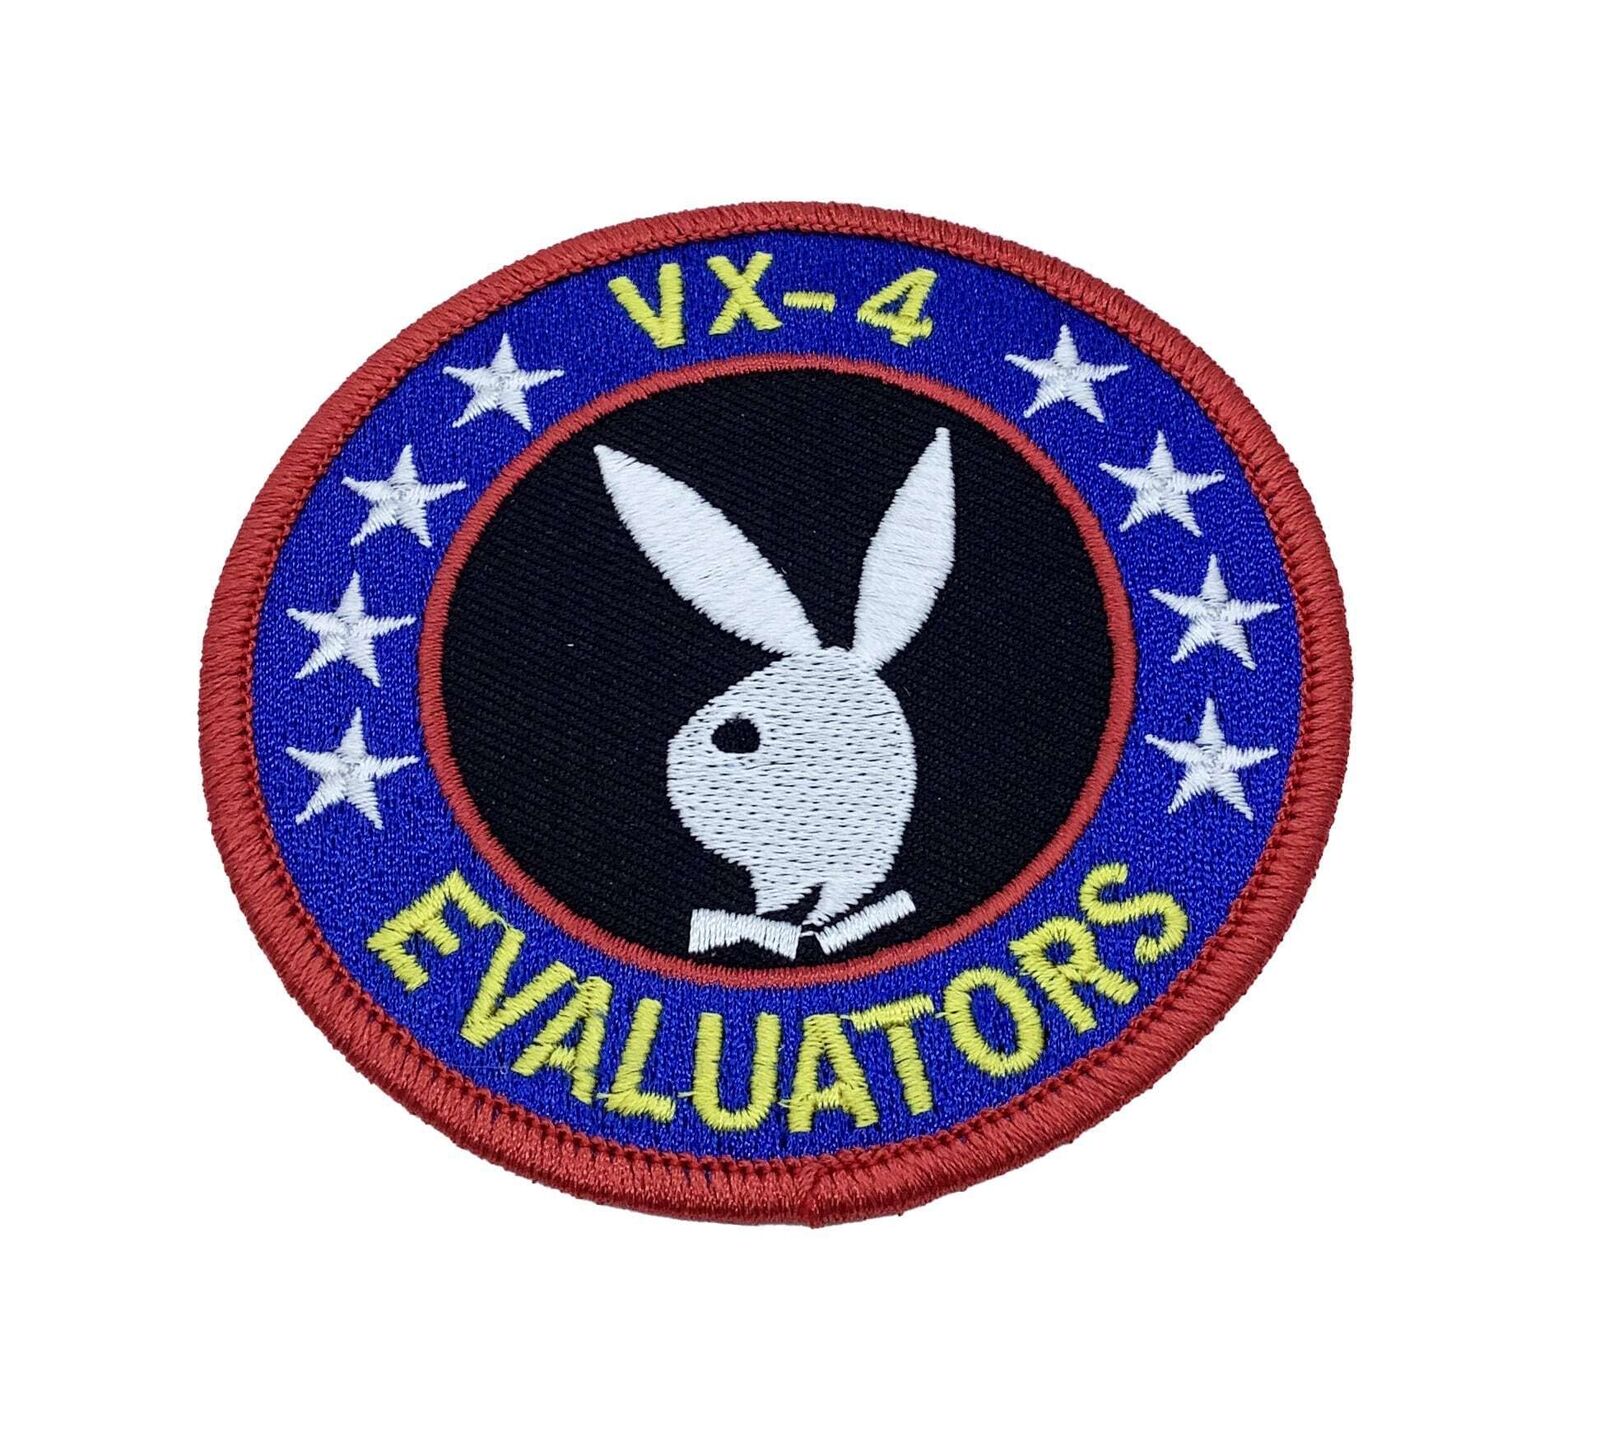 VX-4 Evaluators Shoulder Patch – With Hook and Loop